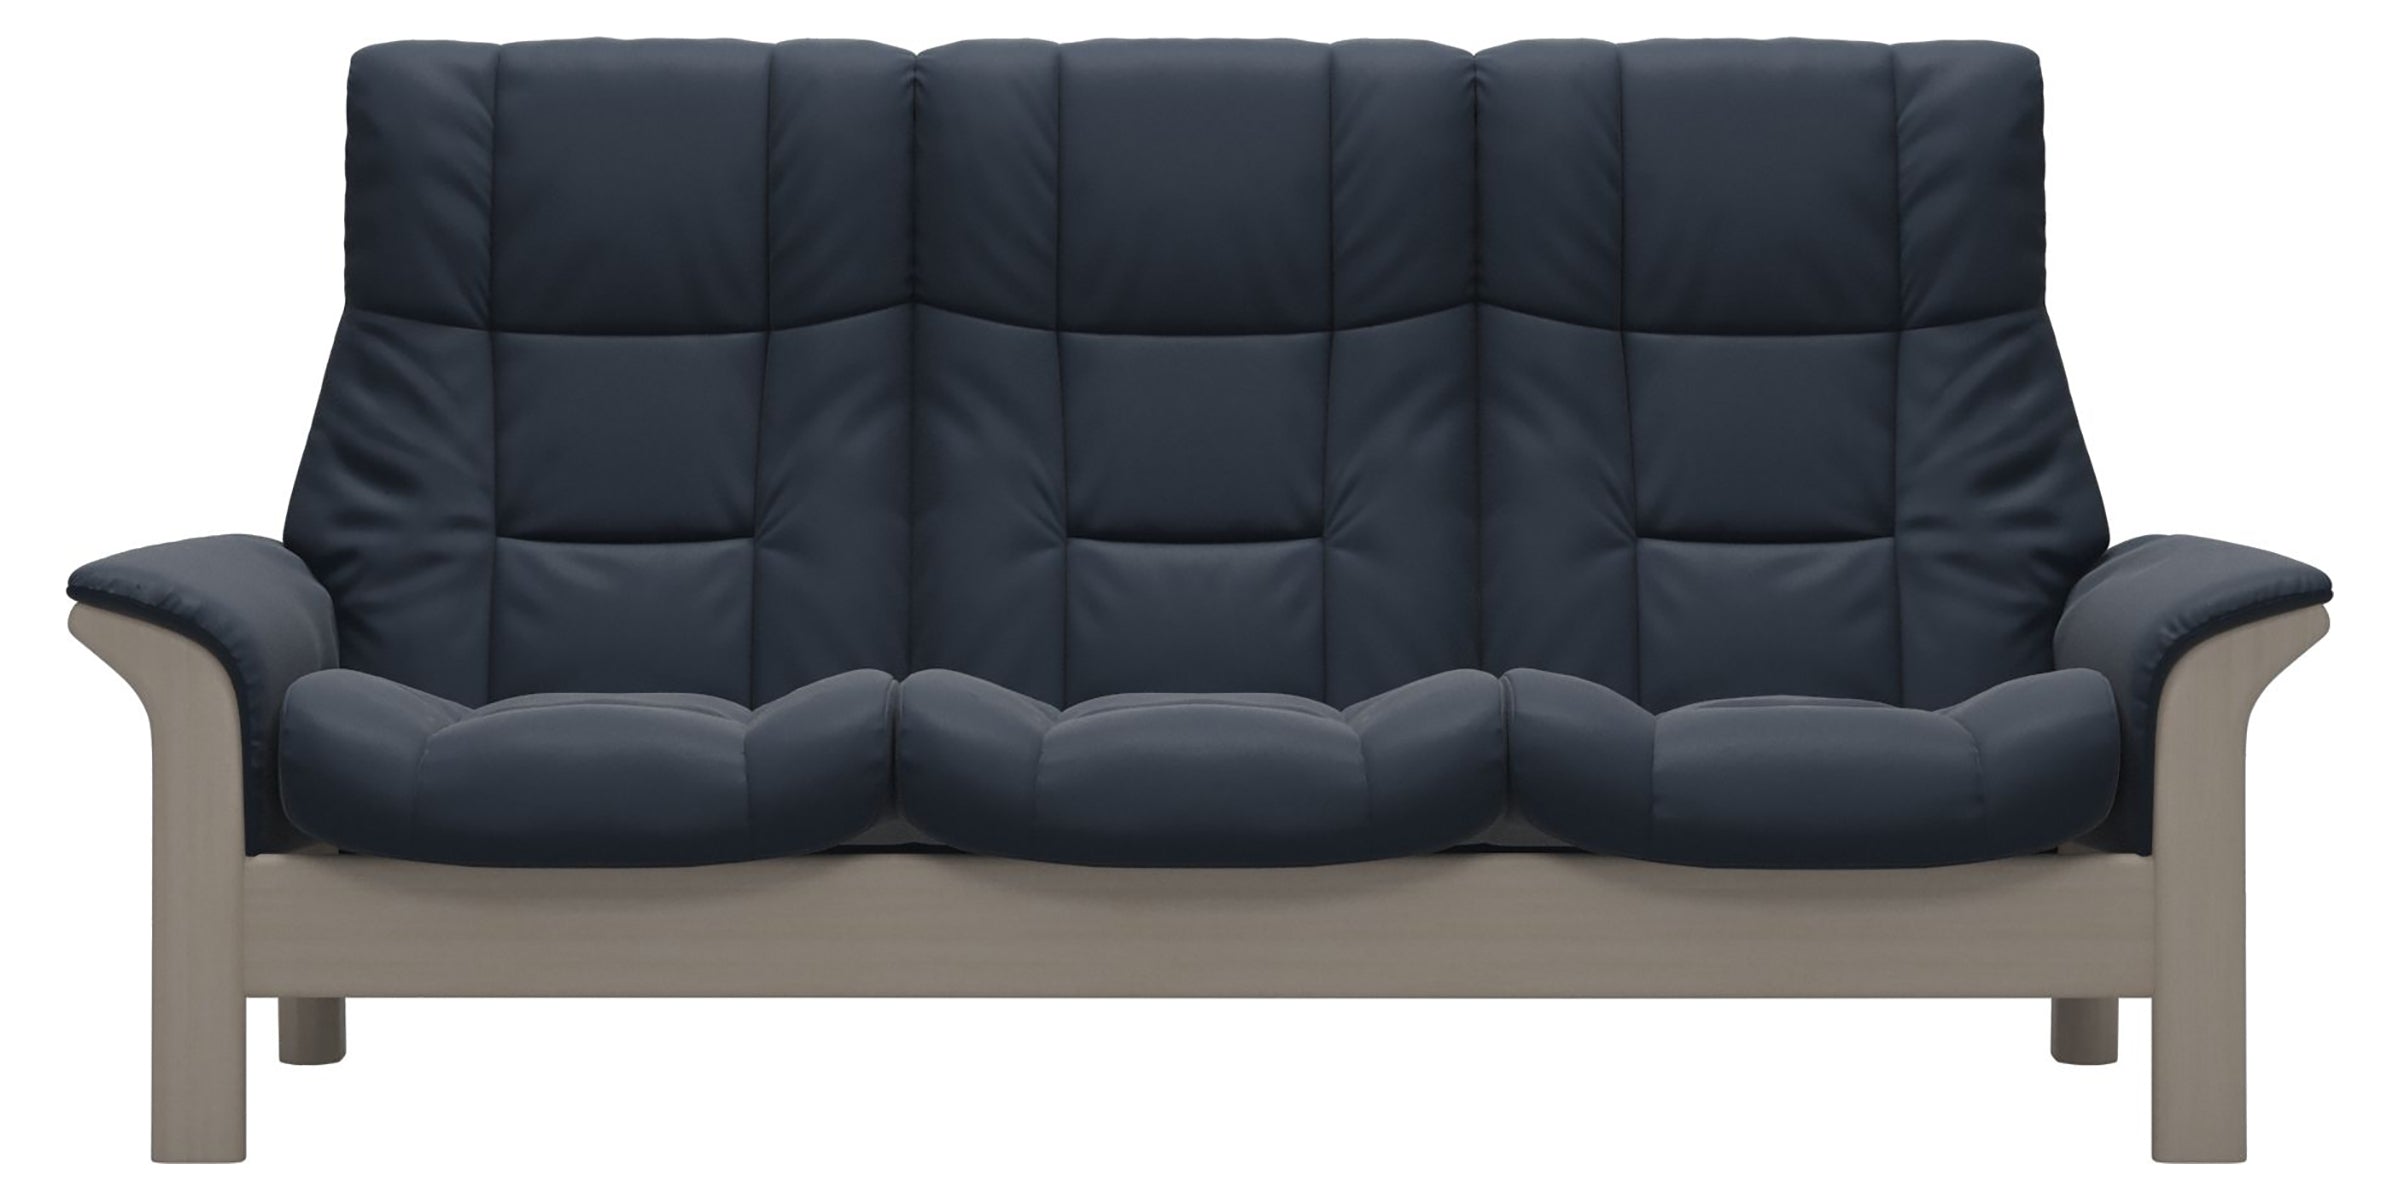 Paloma Leather Oxford Blue and Whitewash Base | Stressless Windsor 3-Seater High Back Sofa | Valley Ridge Furniture